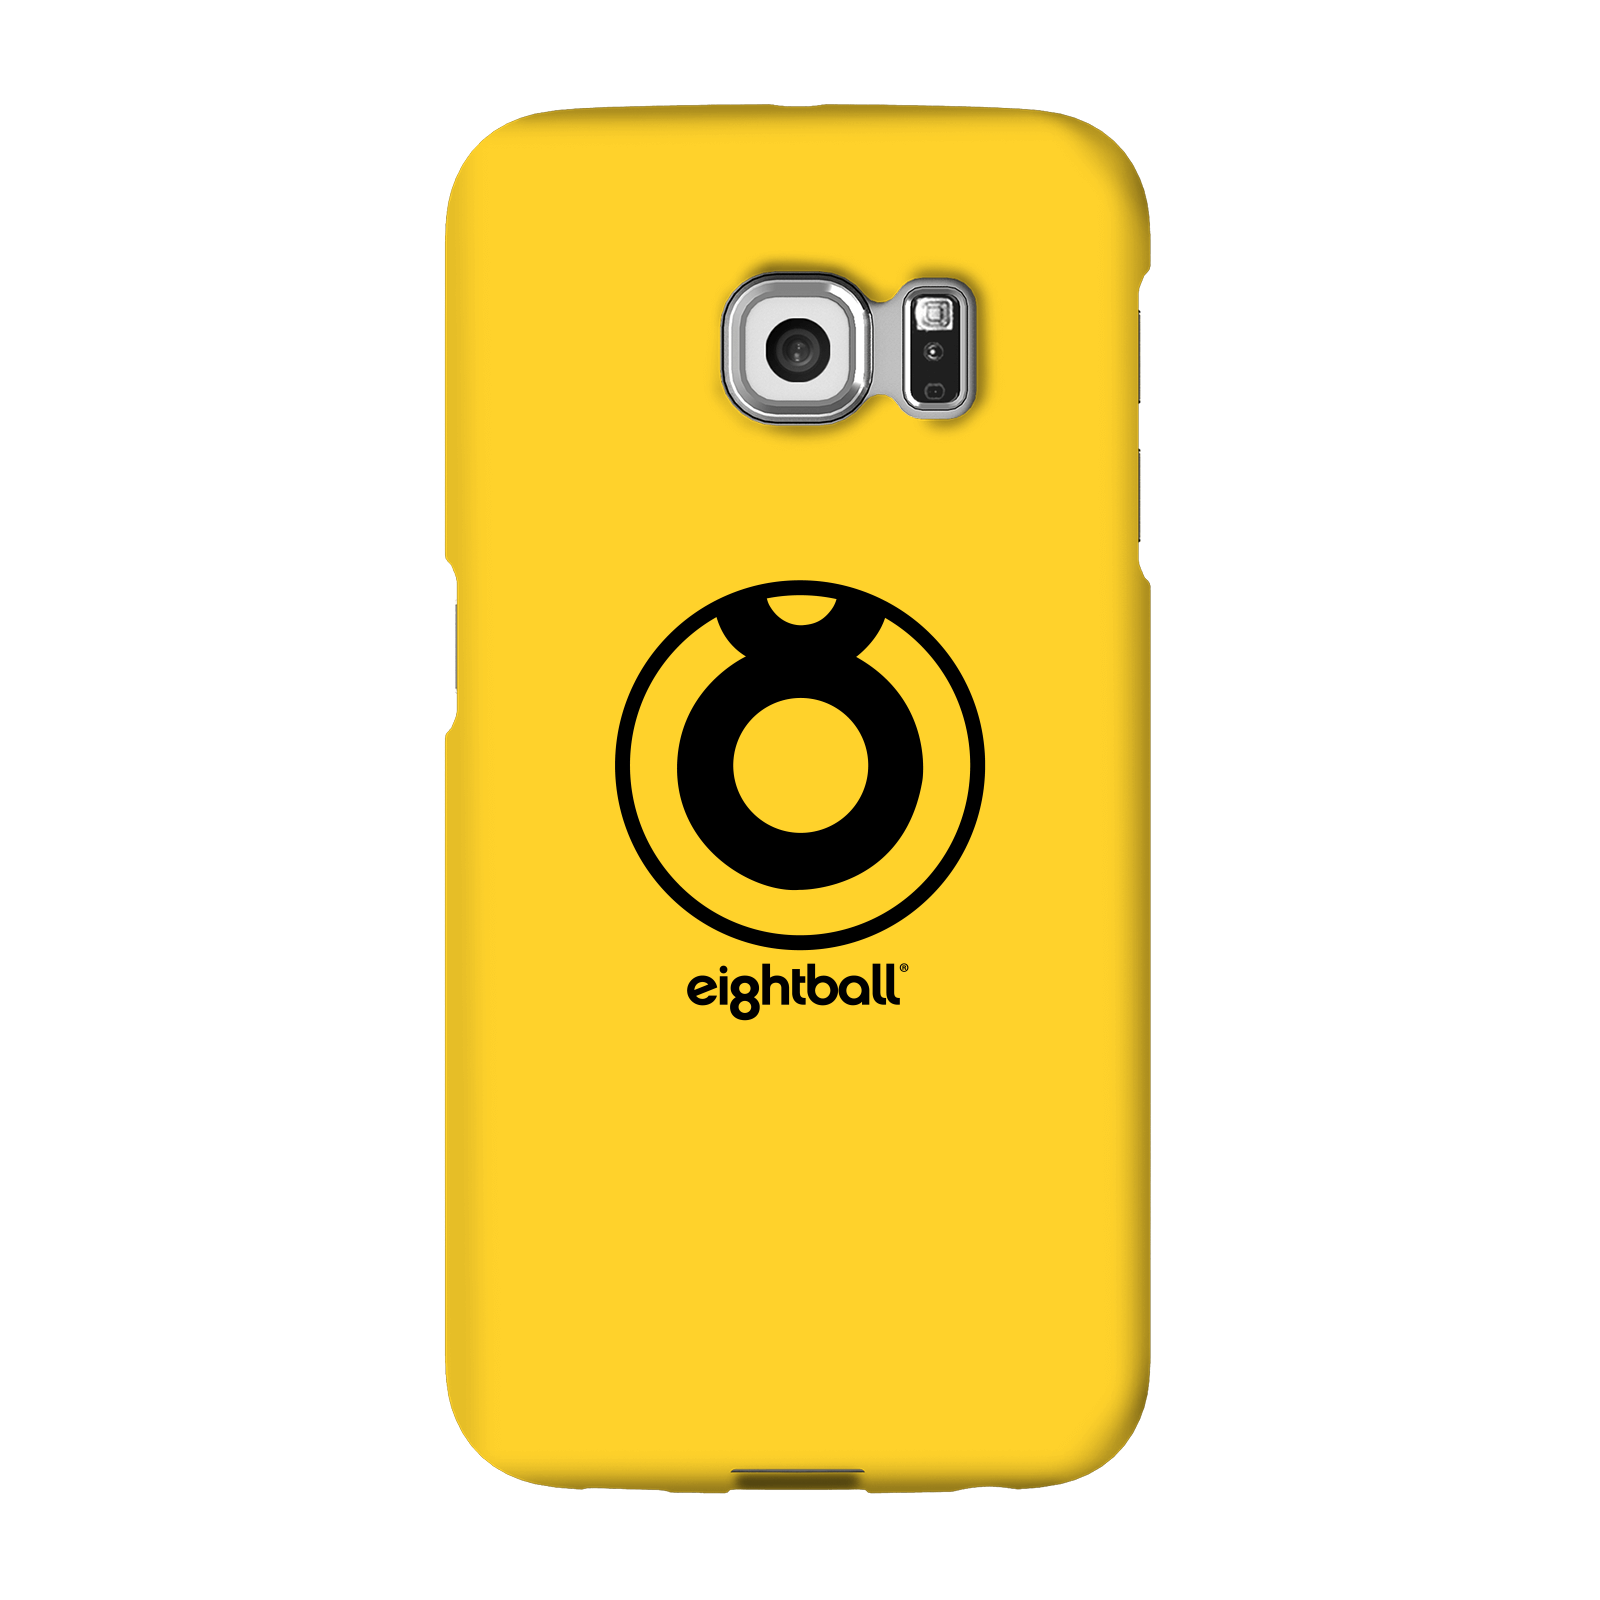 Funda Móvil Ei8htball Large Circle Logo para iPhone y Android - Samsung S6 Edge - Carcasa rígida - Brillante